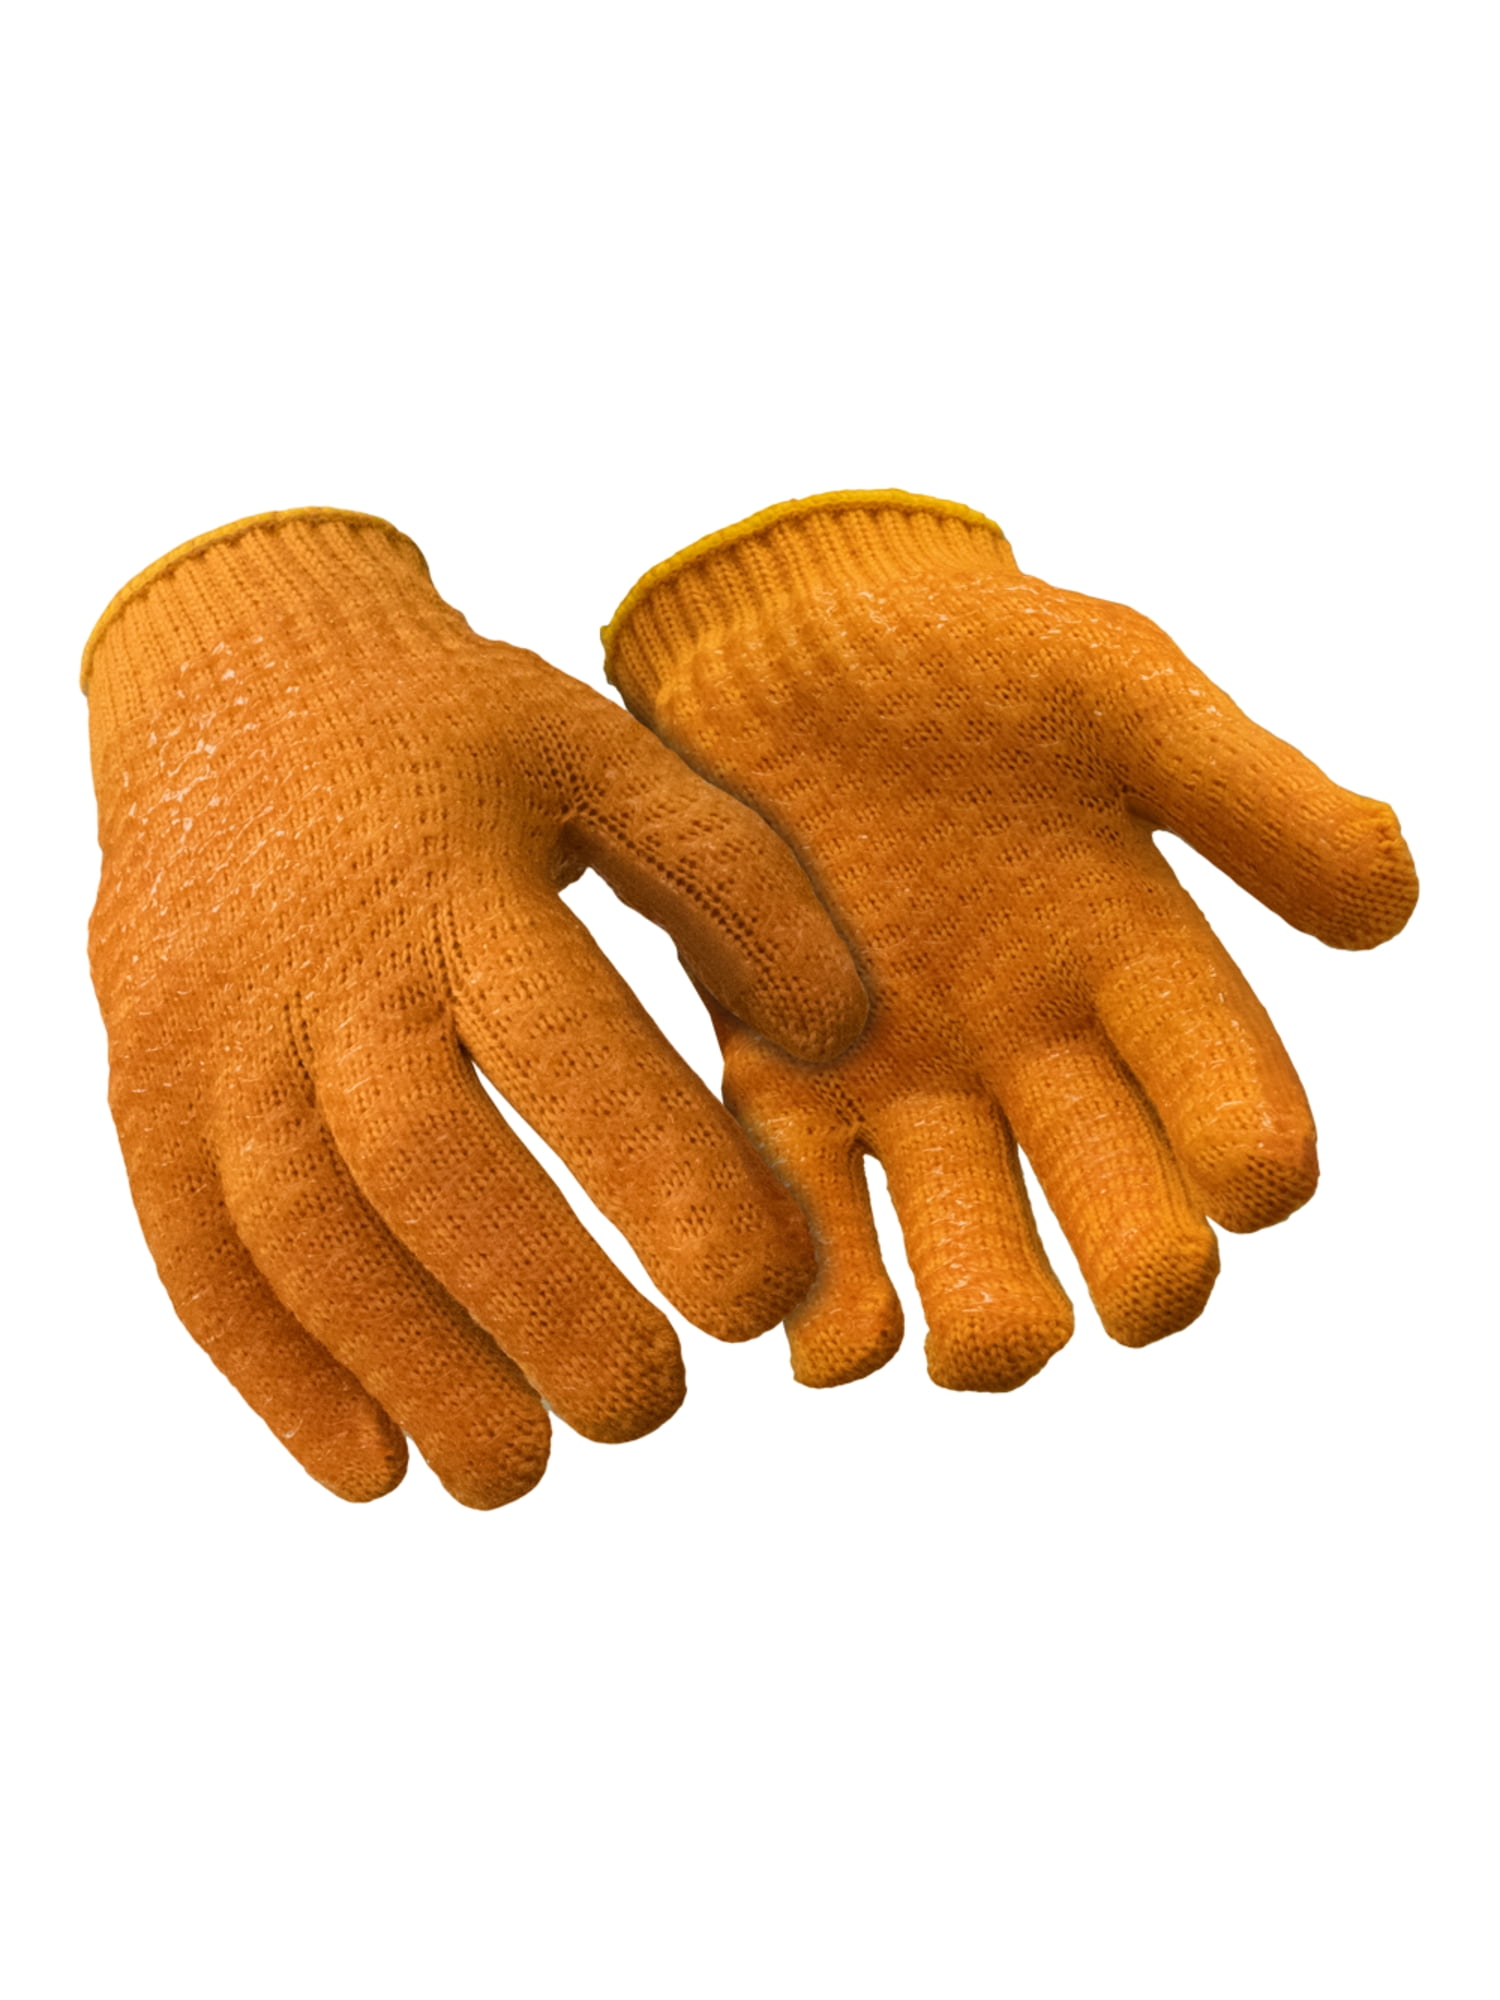 Hurricane Orange "One-Size-Fits-All Fish Grip Gloves 